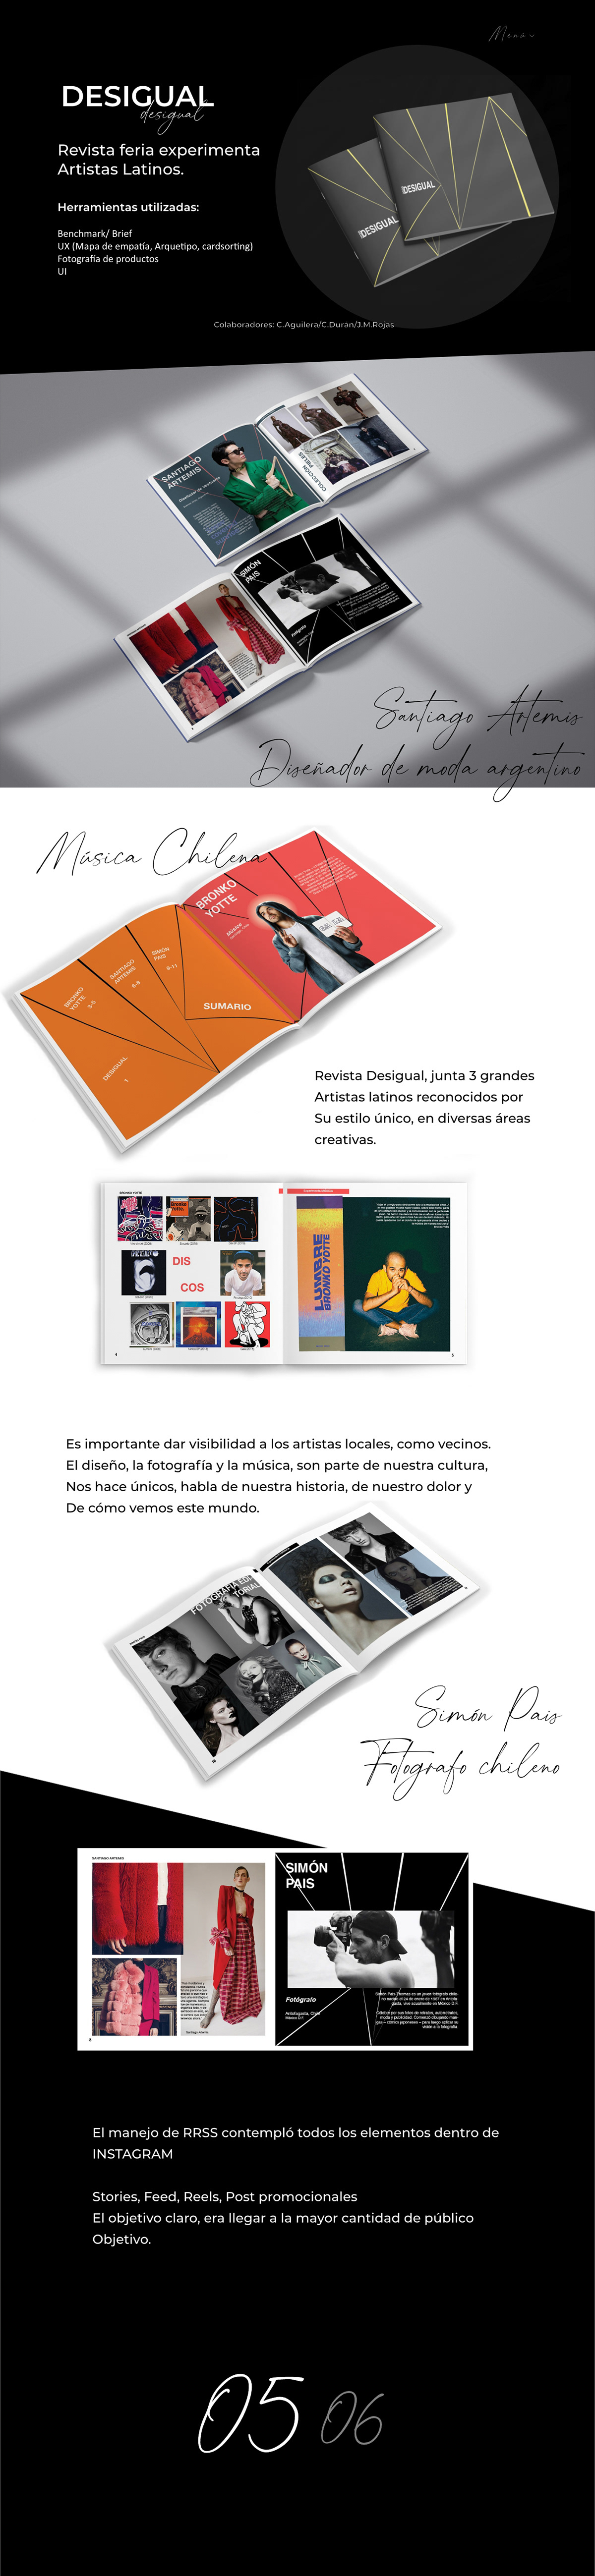 chilean design diseño gráfico IndDesign